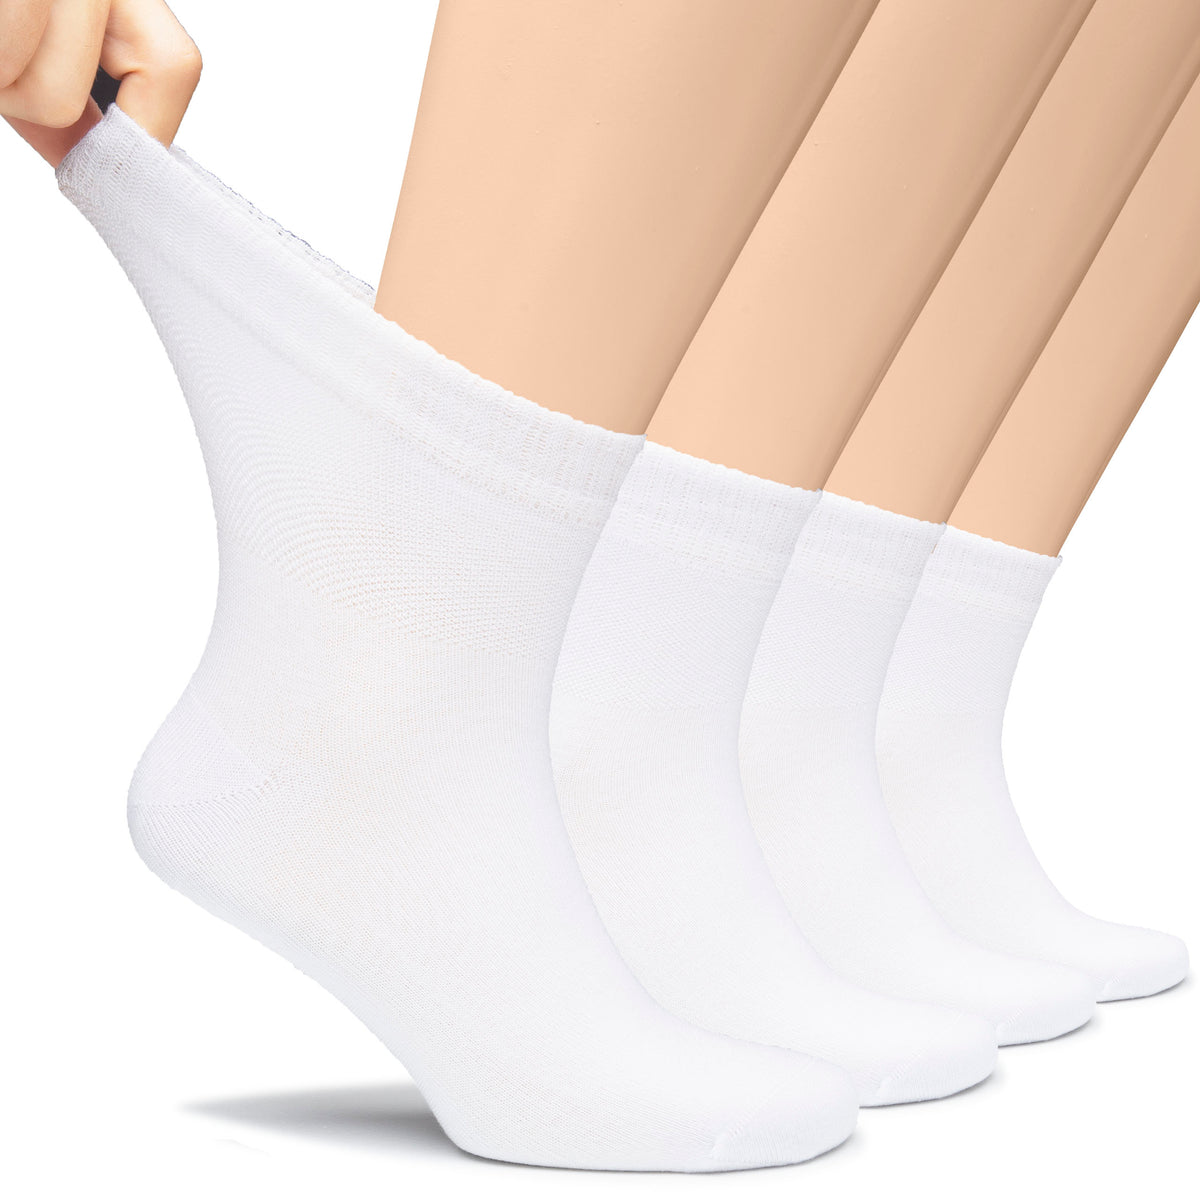 Hugh Ugoli Lightweight Men's Diabetic Ankle Socks Bamboo Thin Socks Seamless Toe and Non-Binding Top, 4 Pairs, Shoe Size 8-11/11-13 | Shoe Size: 11-13 | Navy Blue